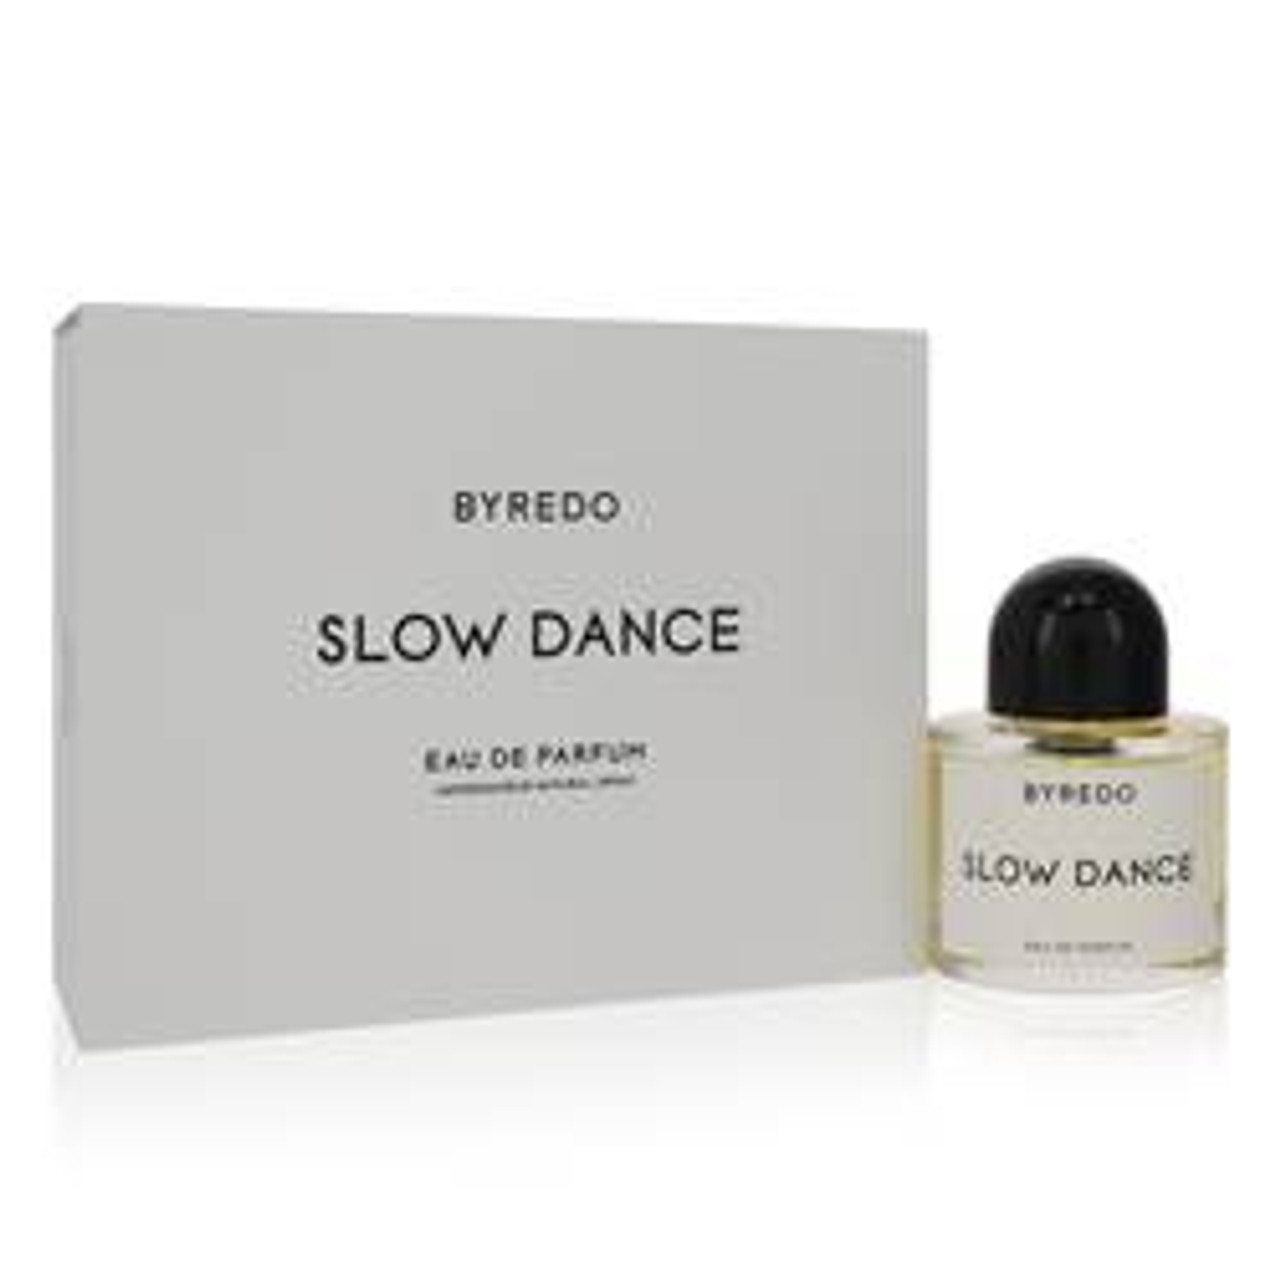 Byredo Slow Dance Perfume By Byredo Eau De Parfum Spray (Unisex) 1.6 oz for Women - *Pre-Order